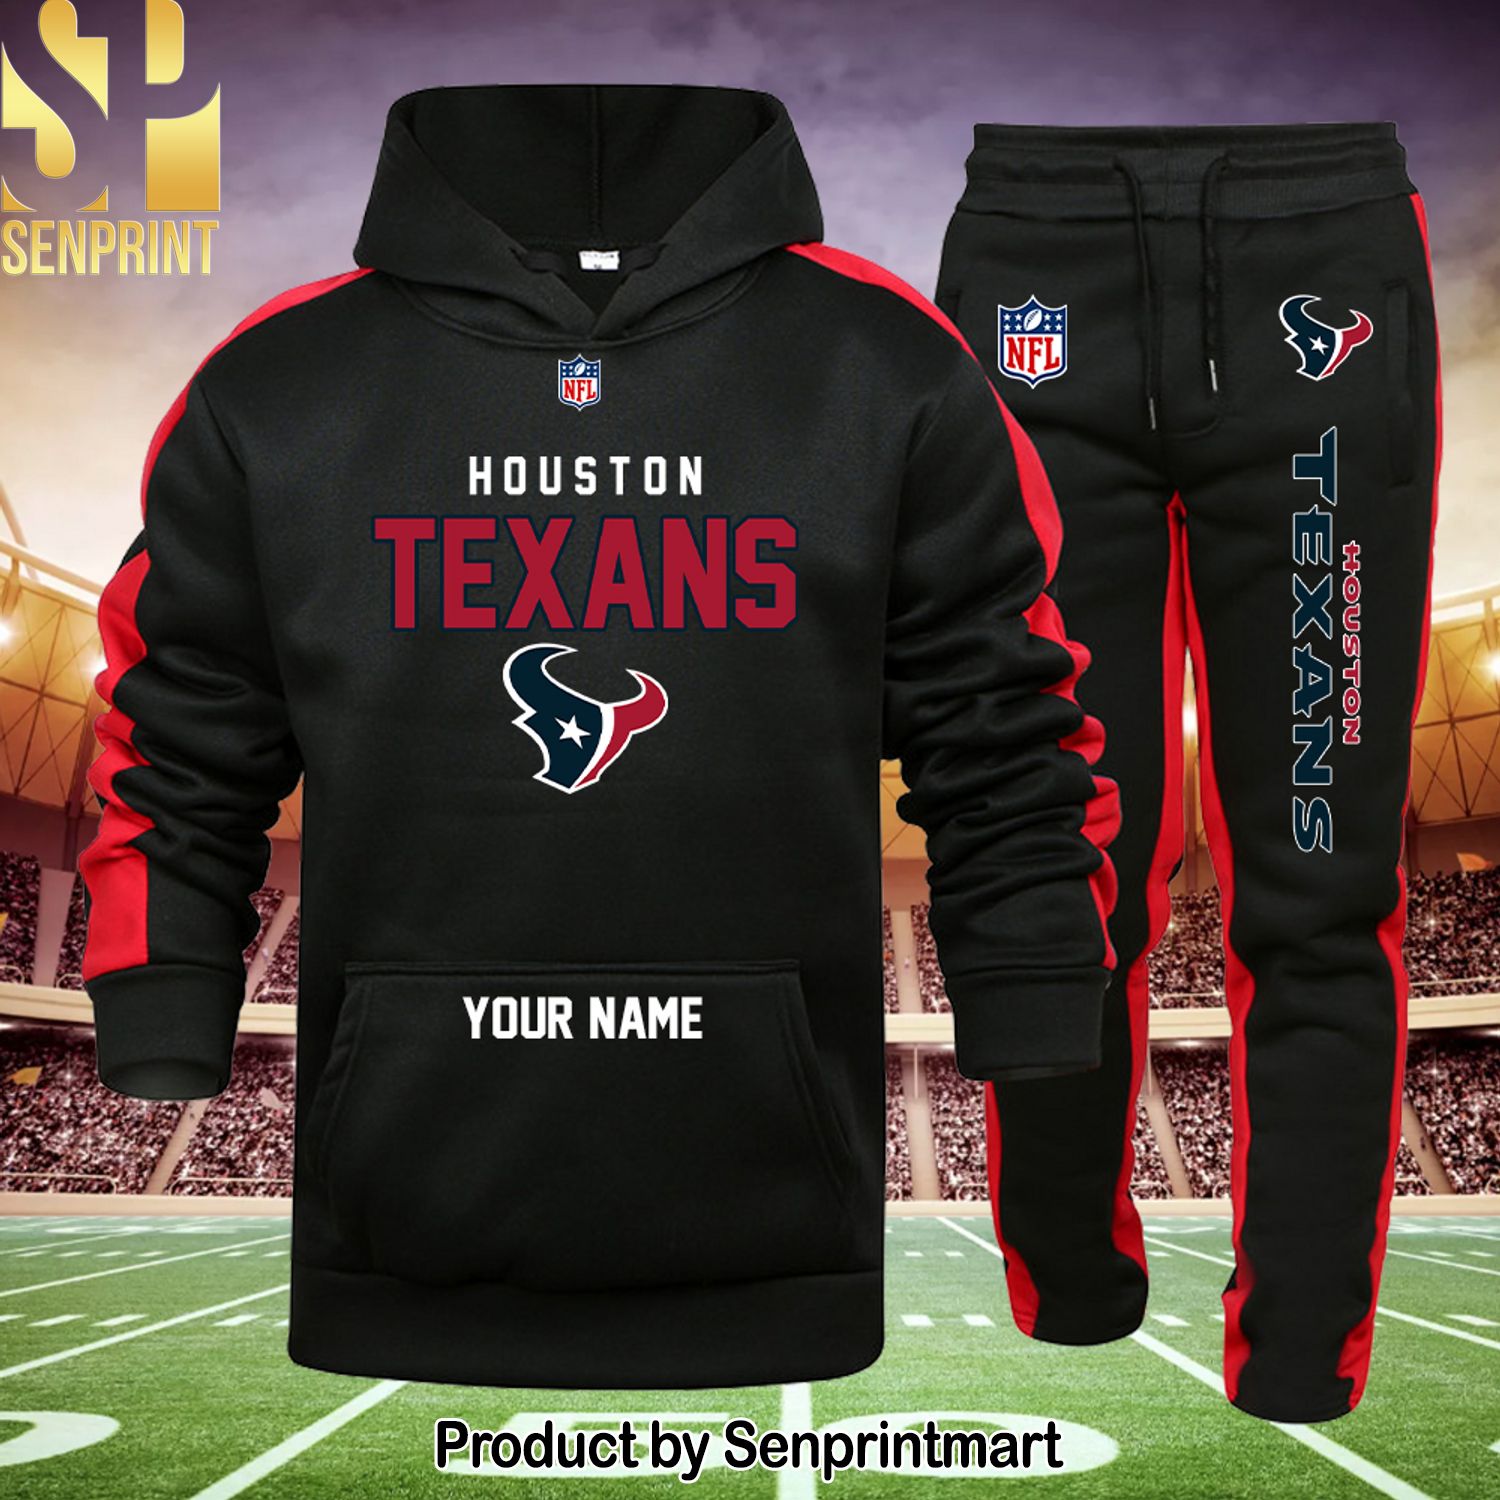 NFL Houston Texans Full Printing Unisex Shirt and Sweatpants